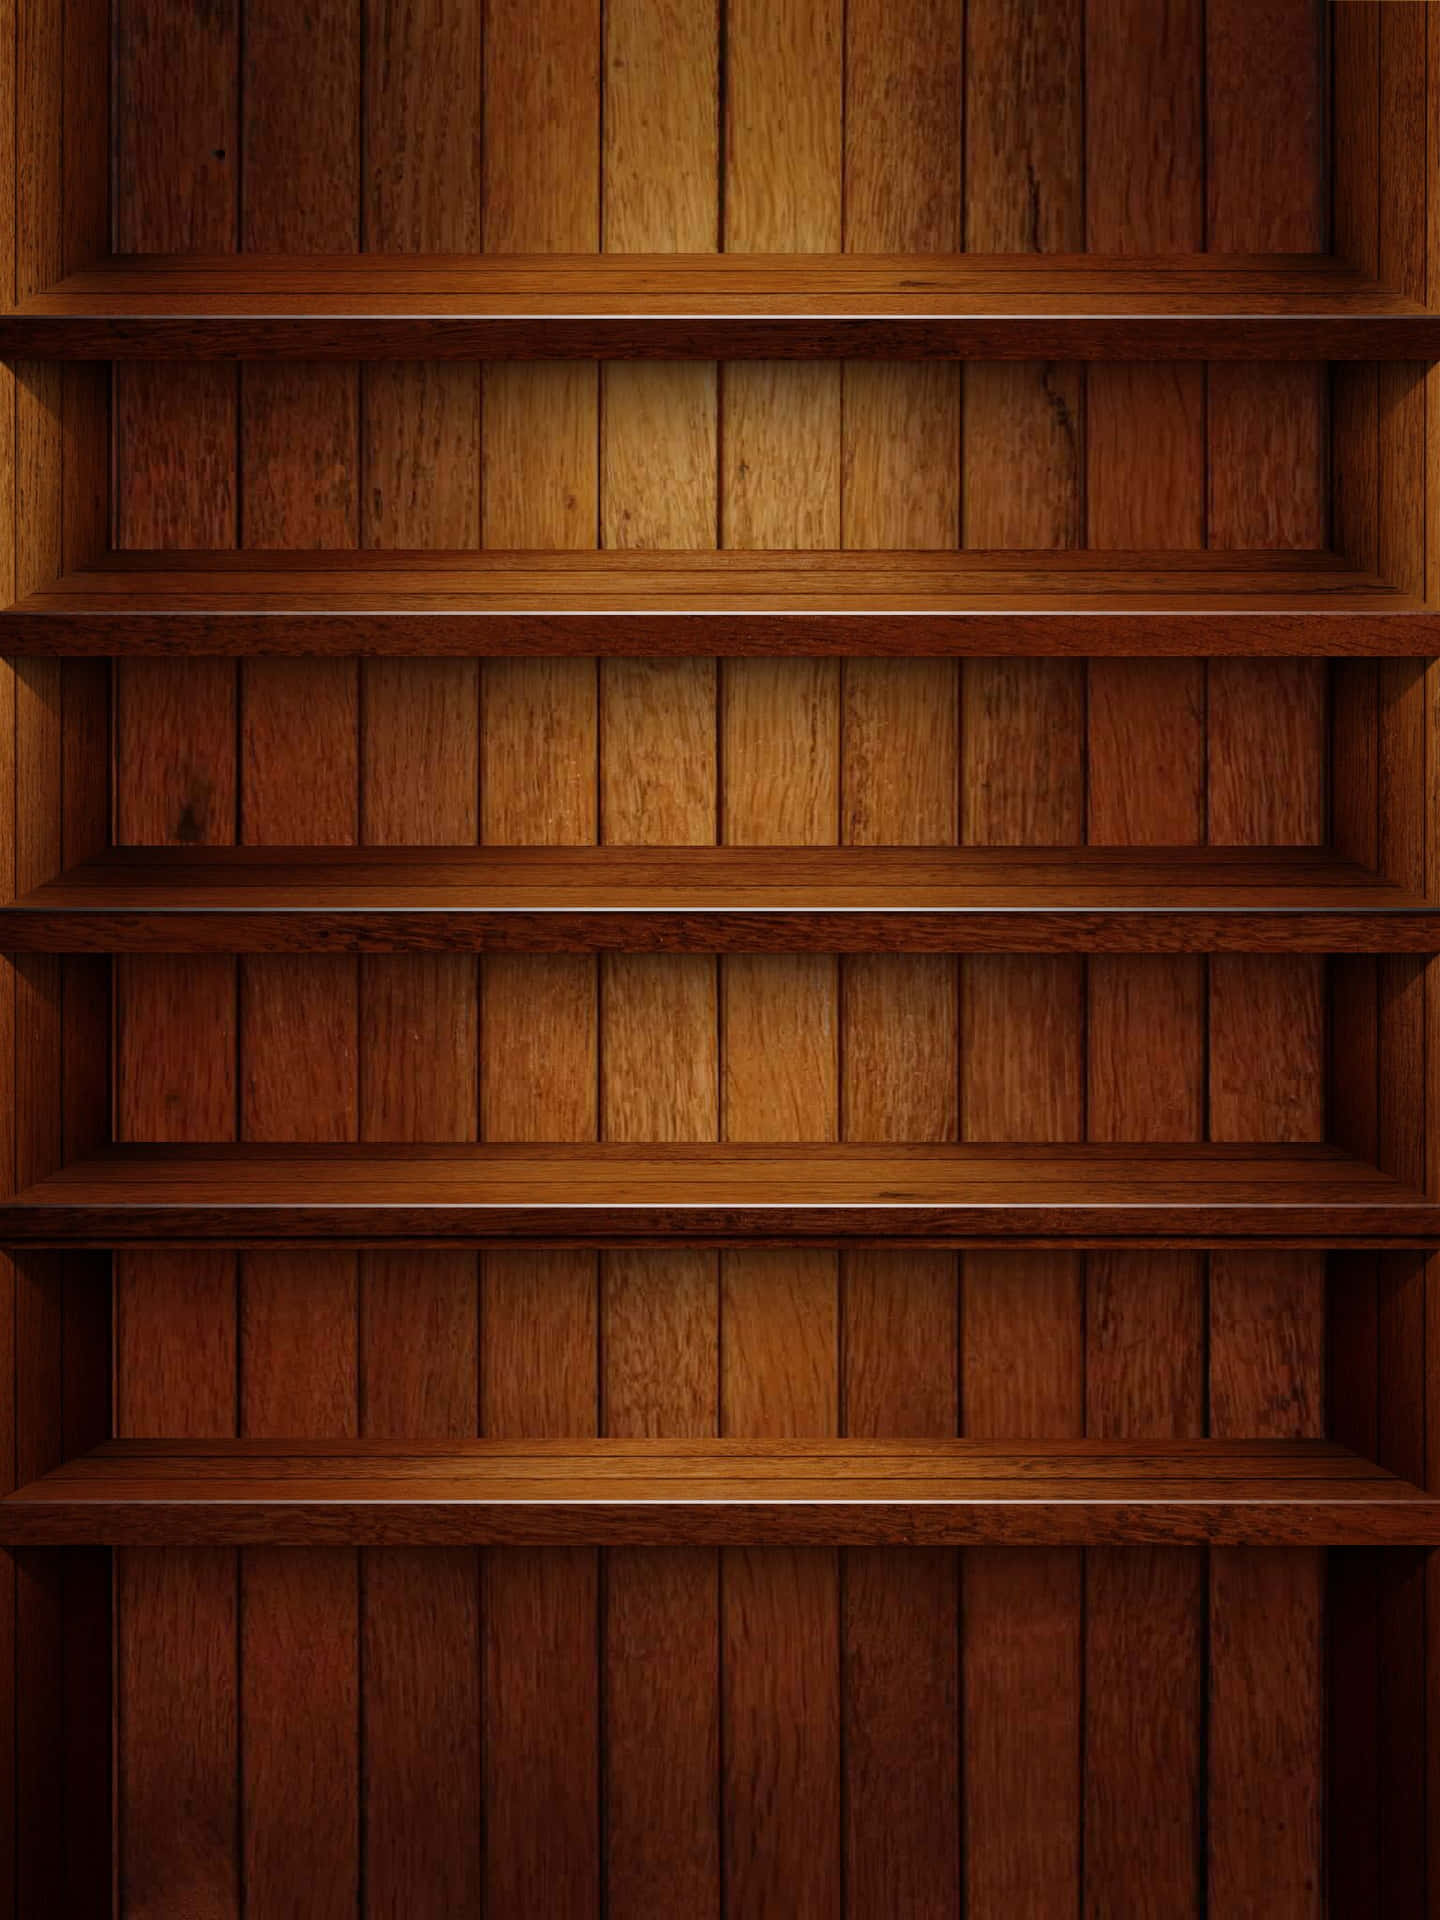 Wooden Empty Bookshelf Background For Desktop Computer Background